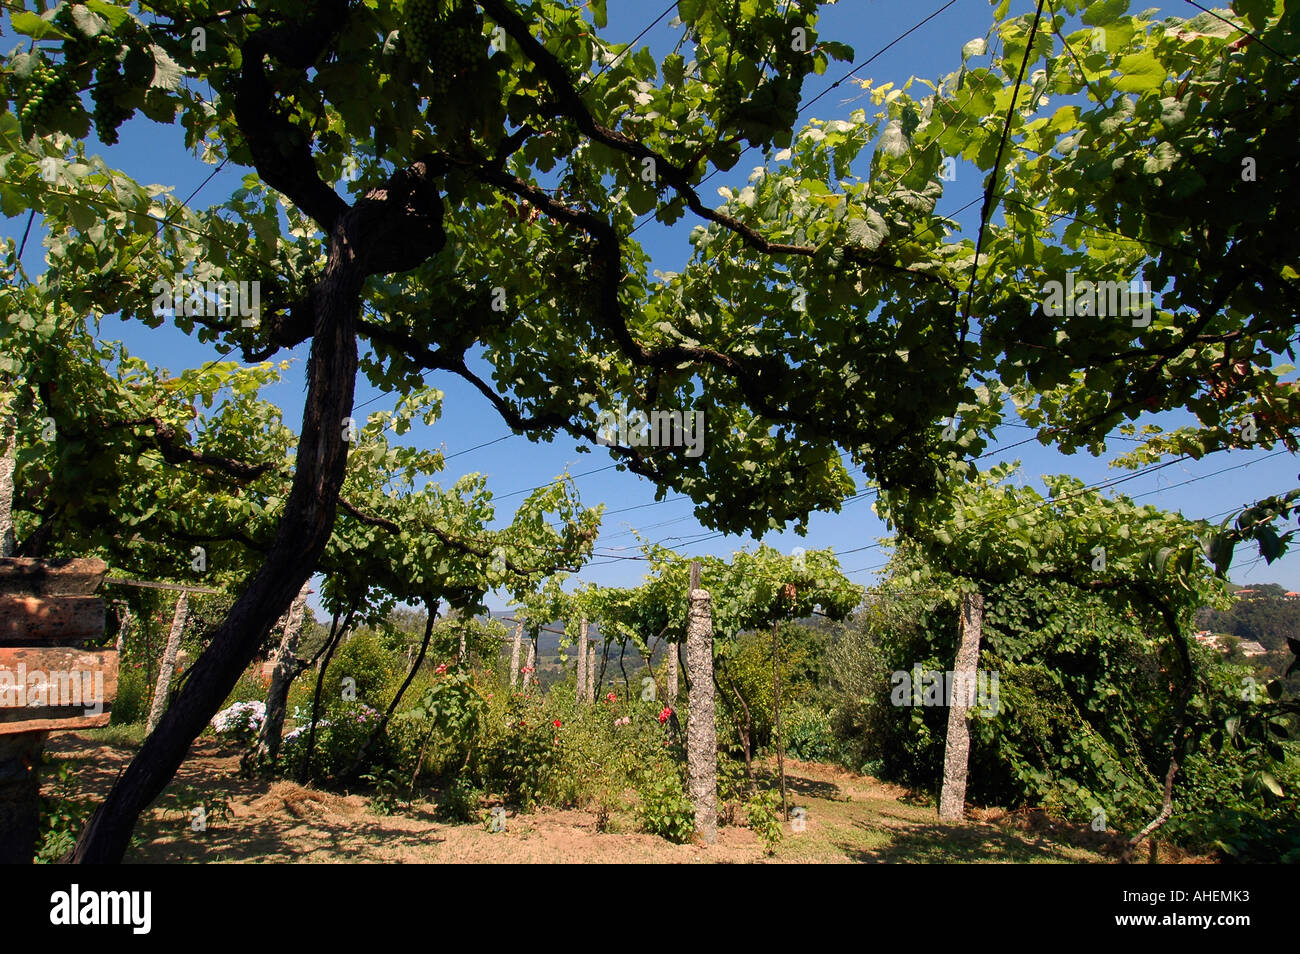 Vineyard plantation in a rural area near Ponte da Barca in the district ...